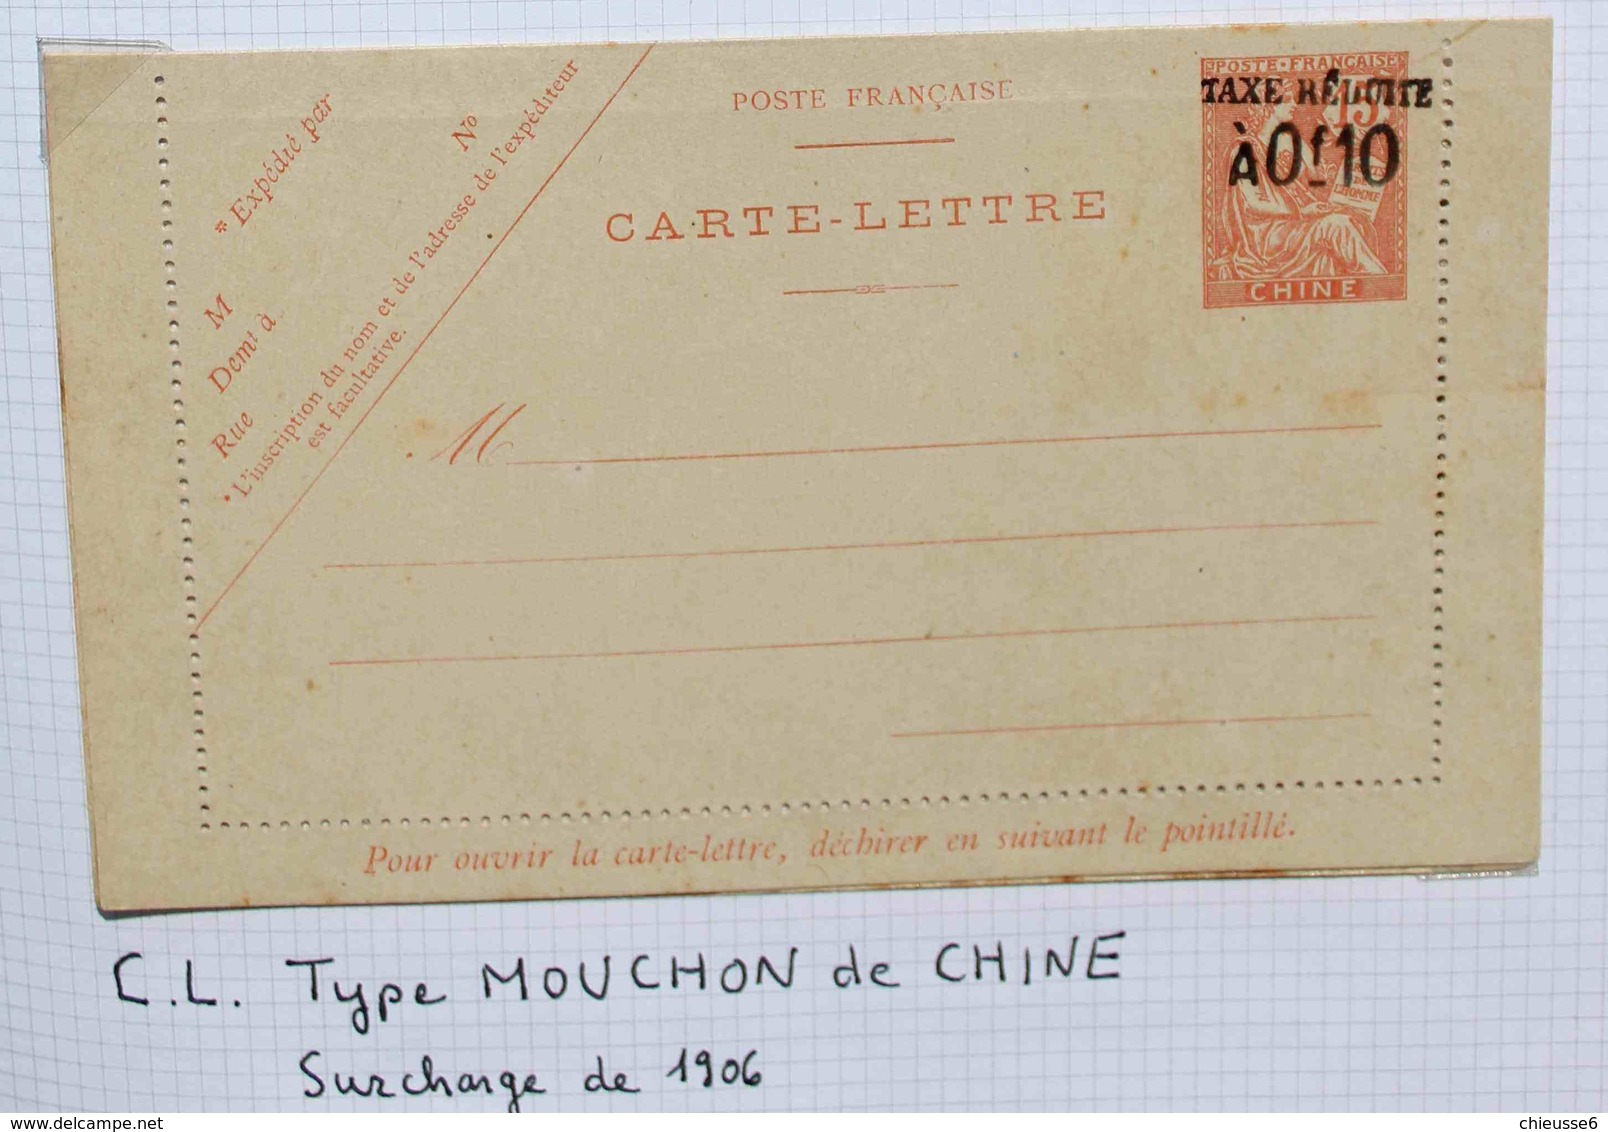 Chine - C.L  Type Mouchon  CHINE  - Taxe Réduite A 0F10 - Covers & Documents